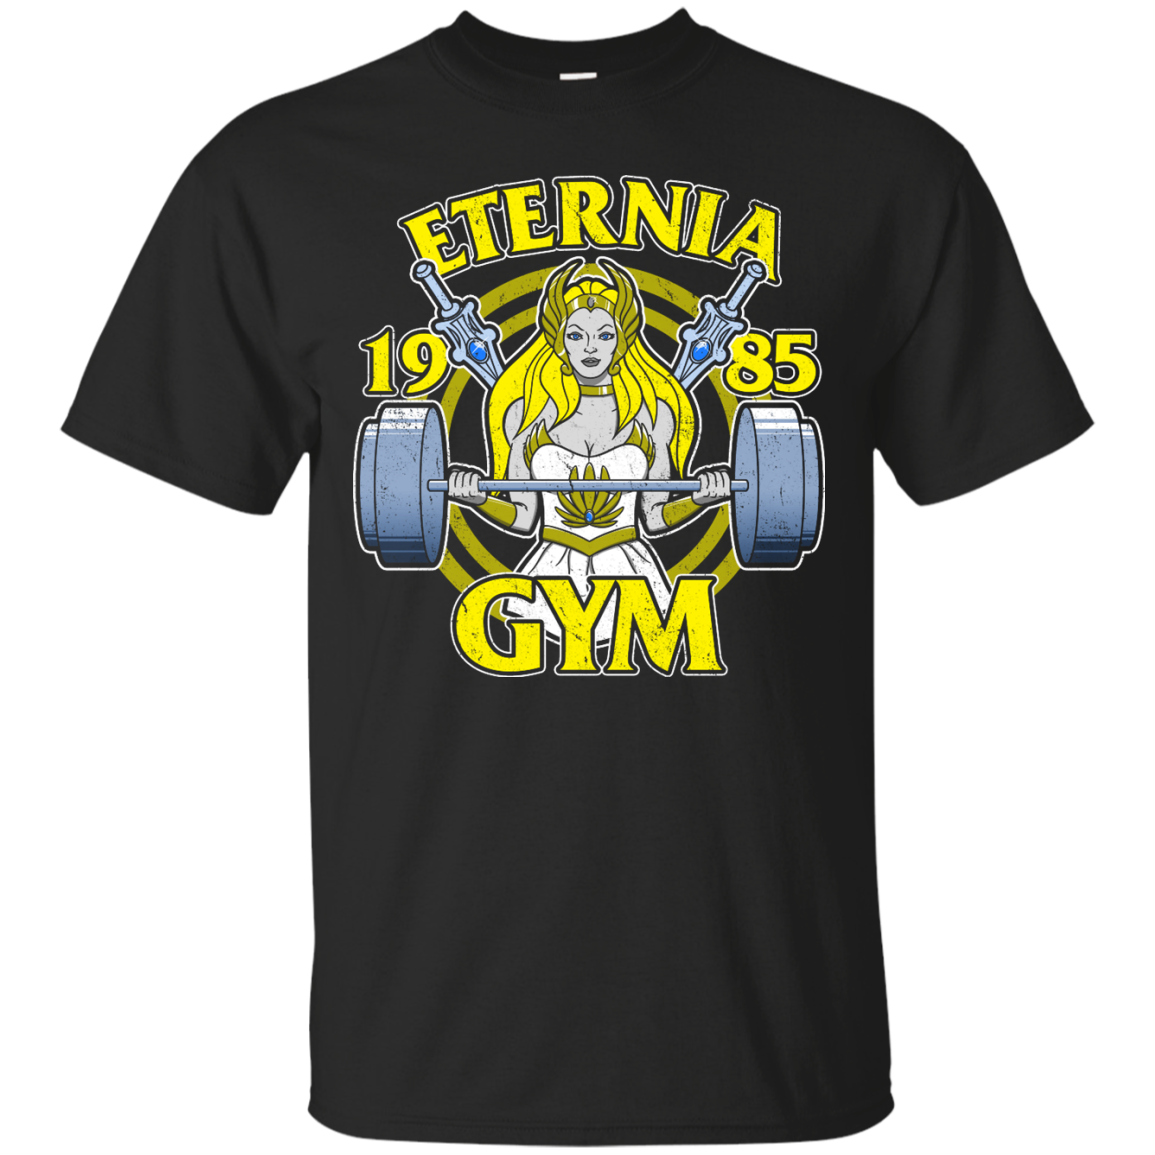 She-ra Eternia Gym T-shirt